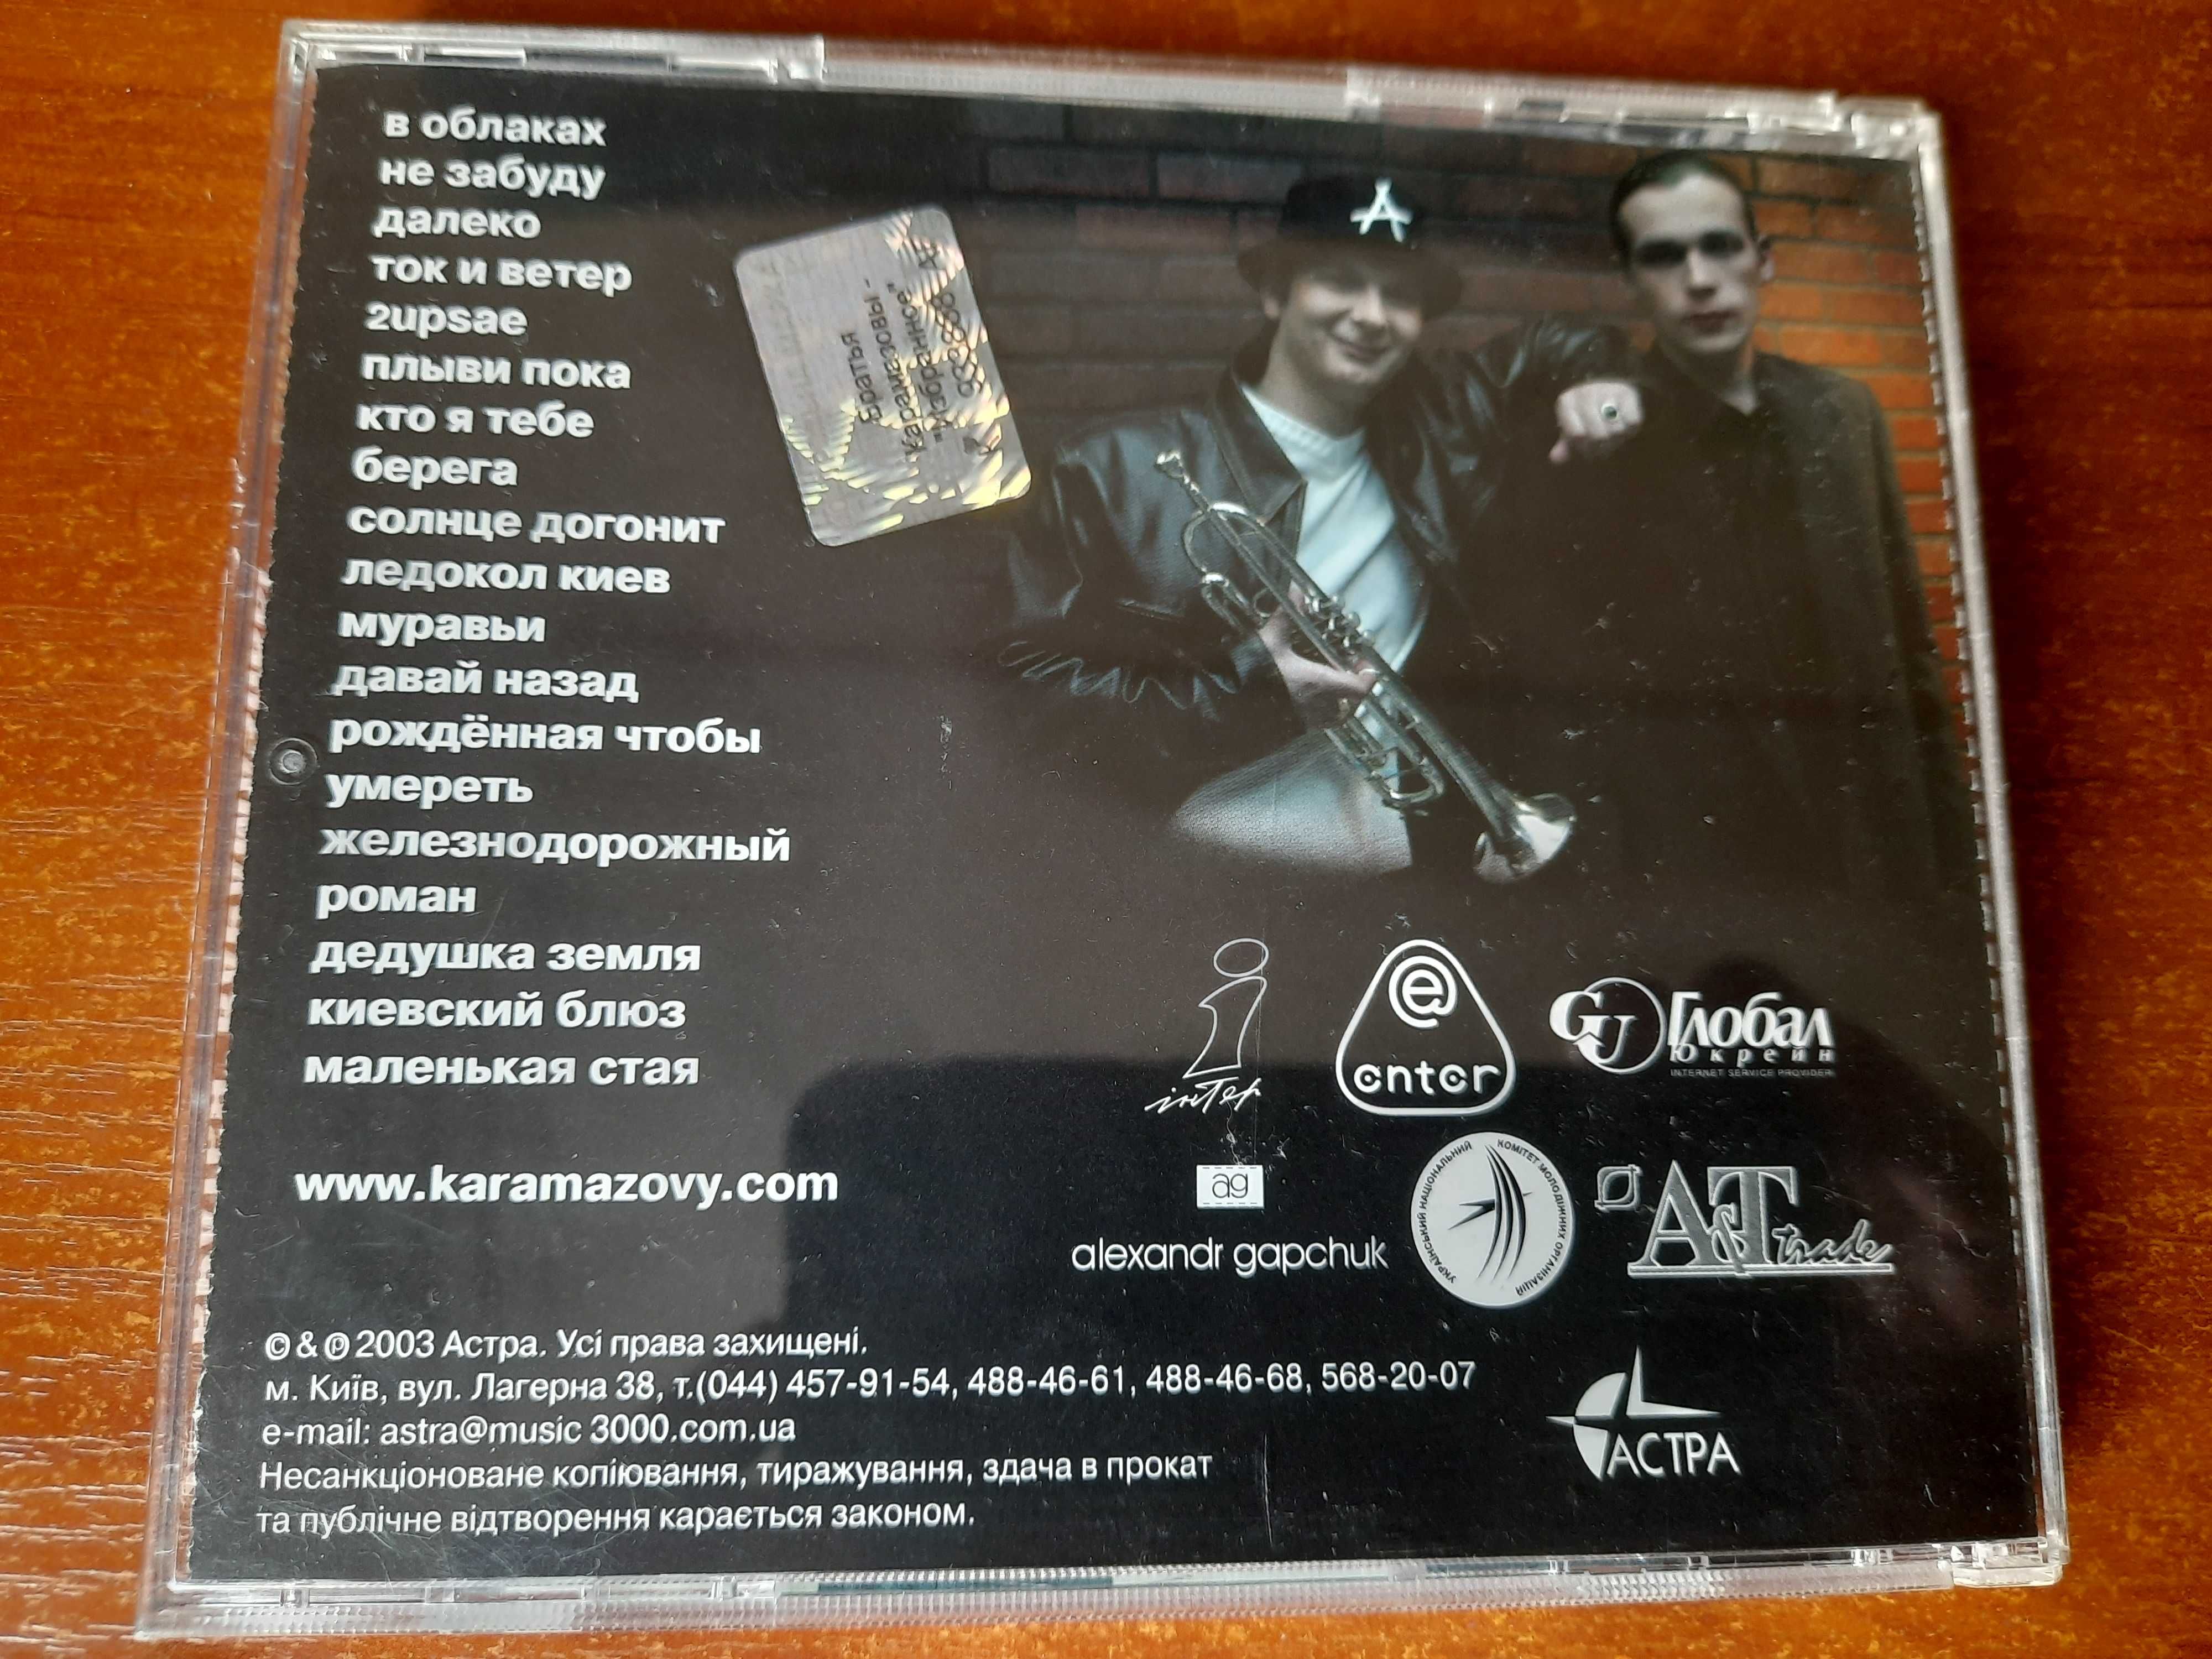 Audio CD Братья Карамазовы - Избранное